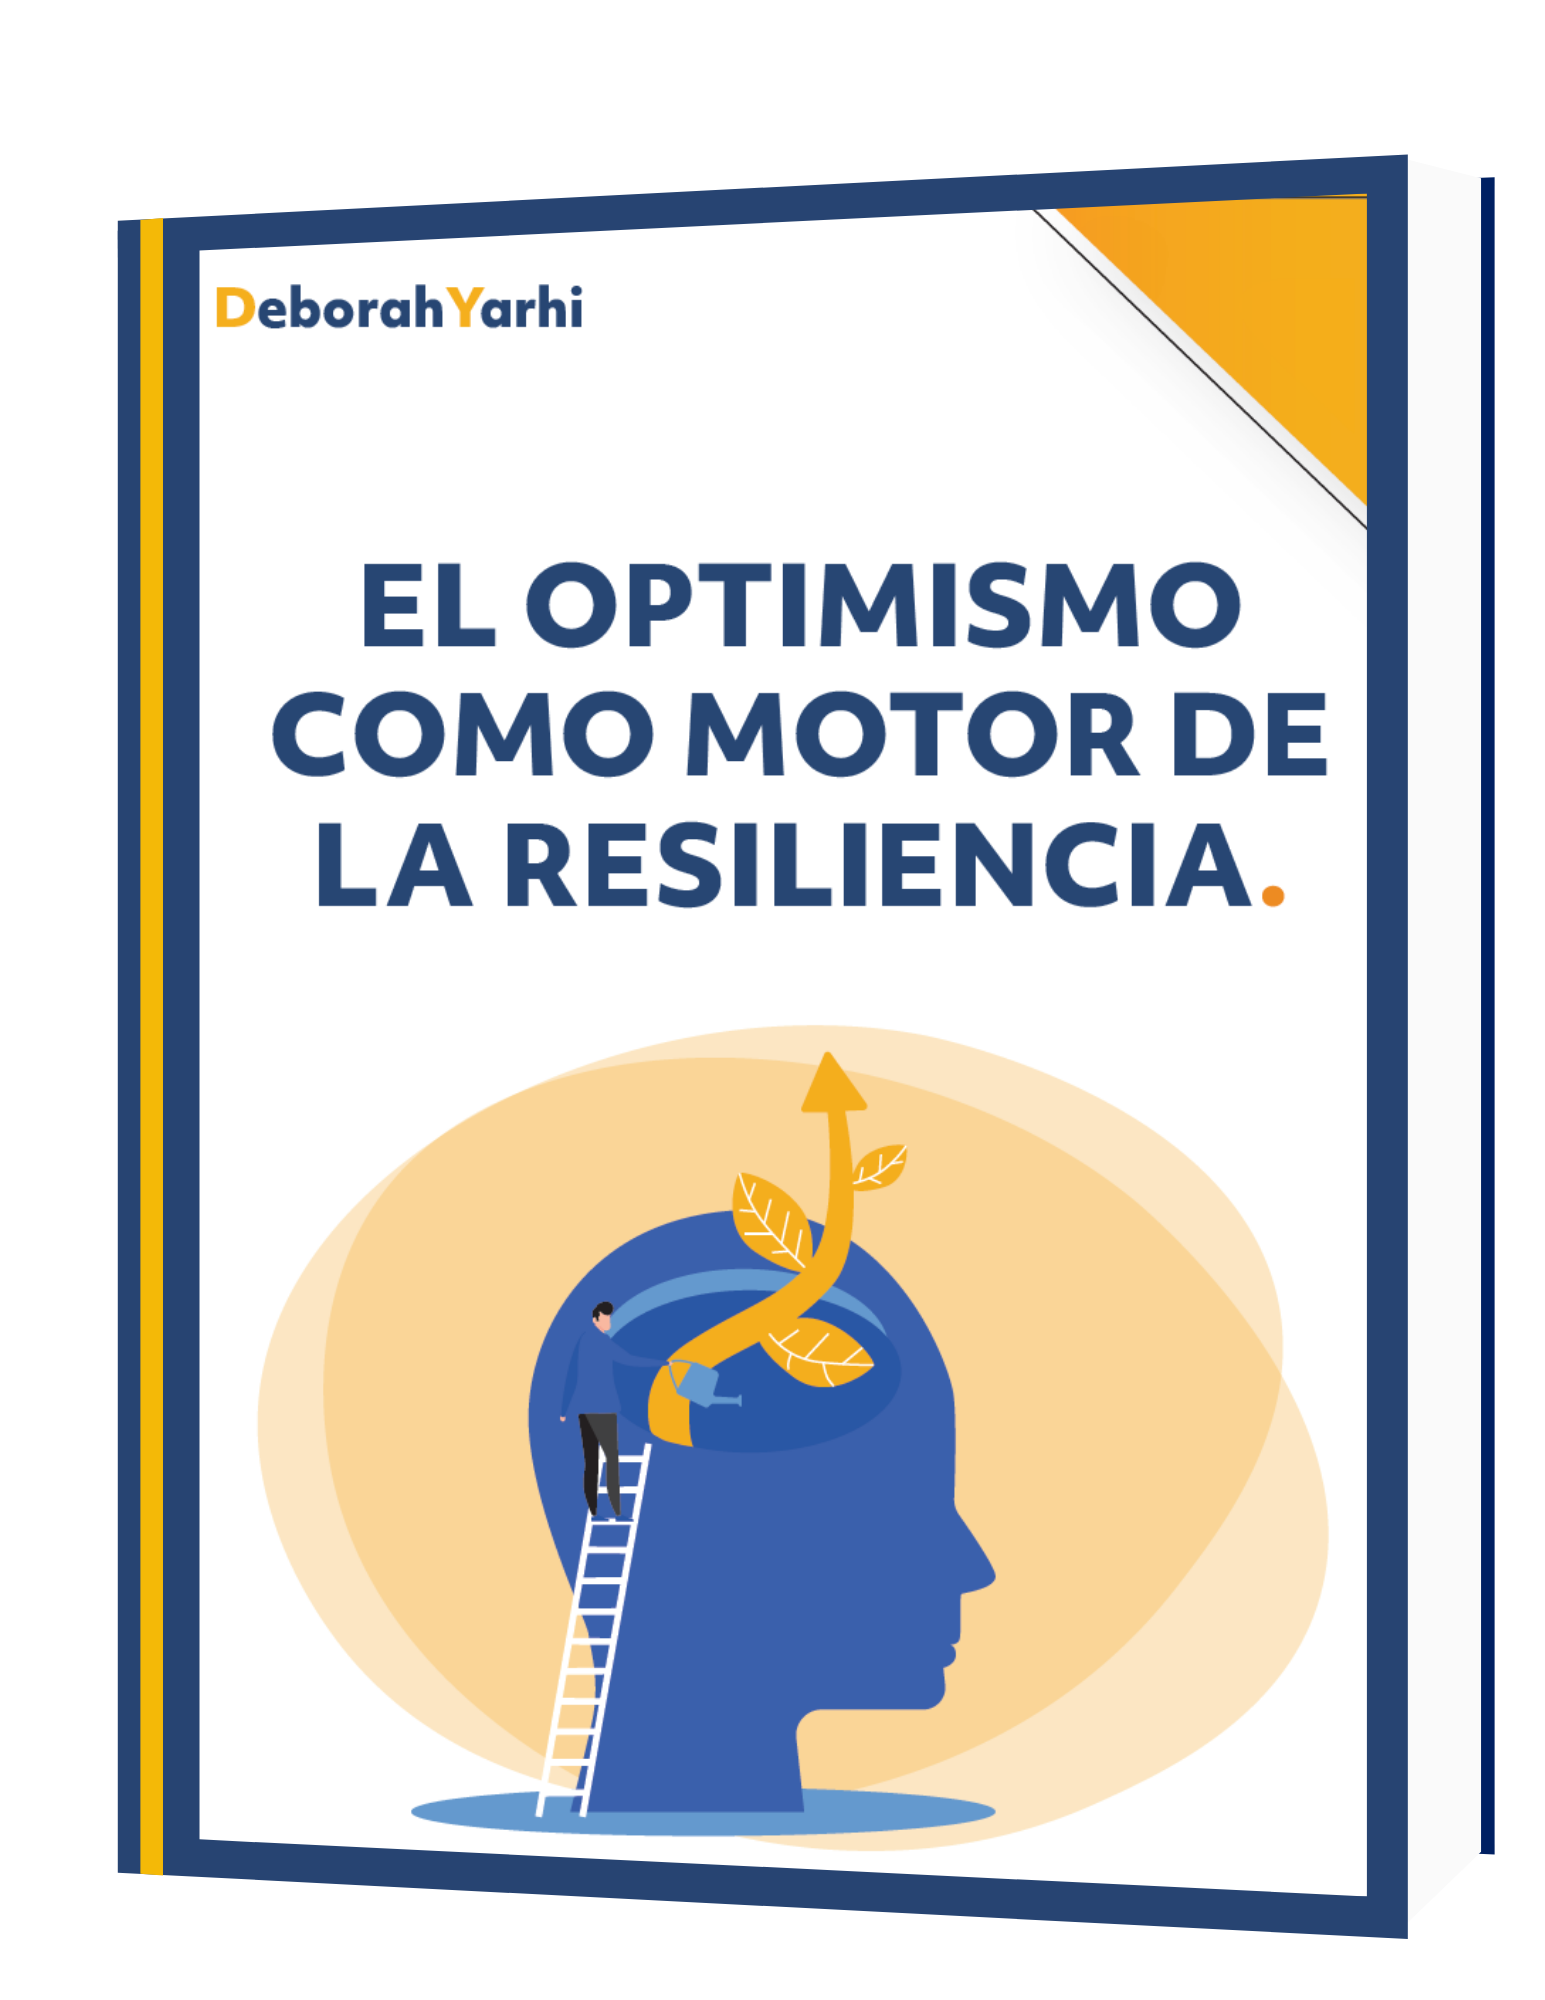 Portada - Ebook resiliencia-2